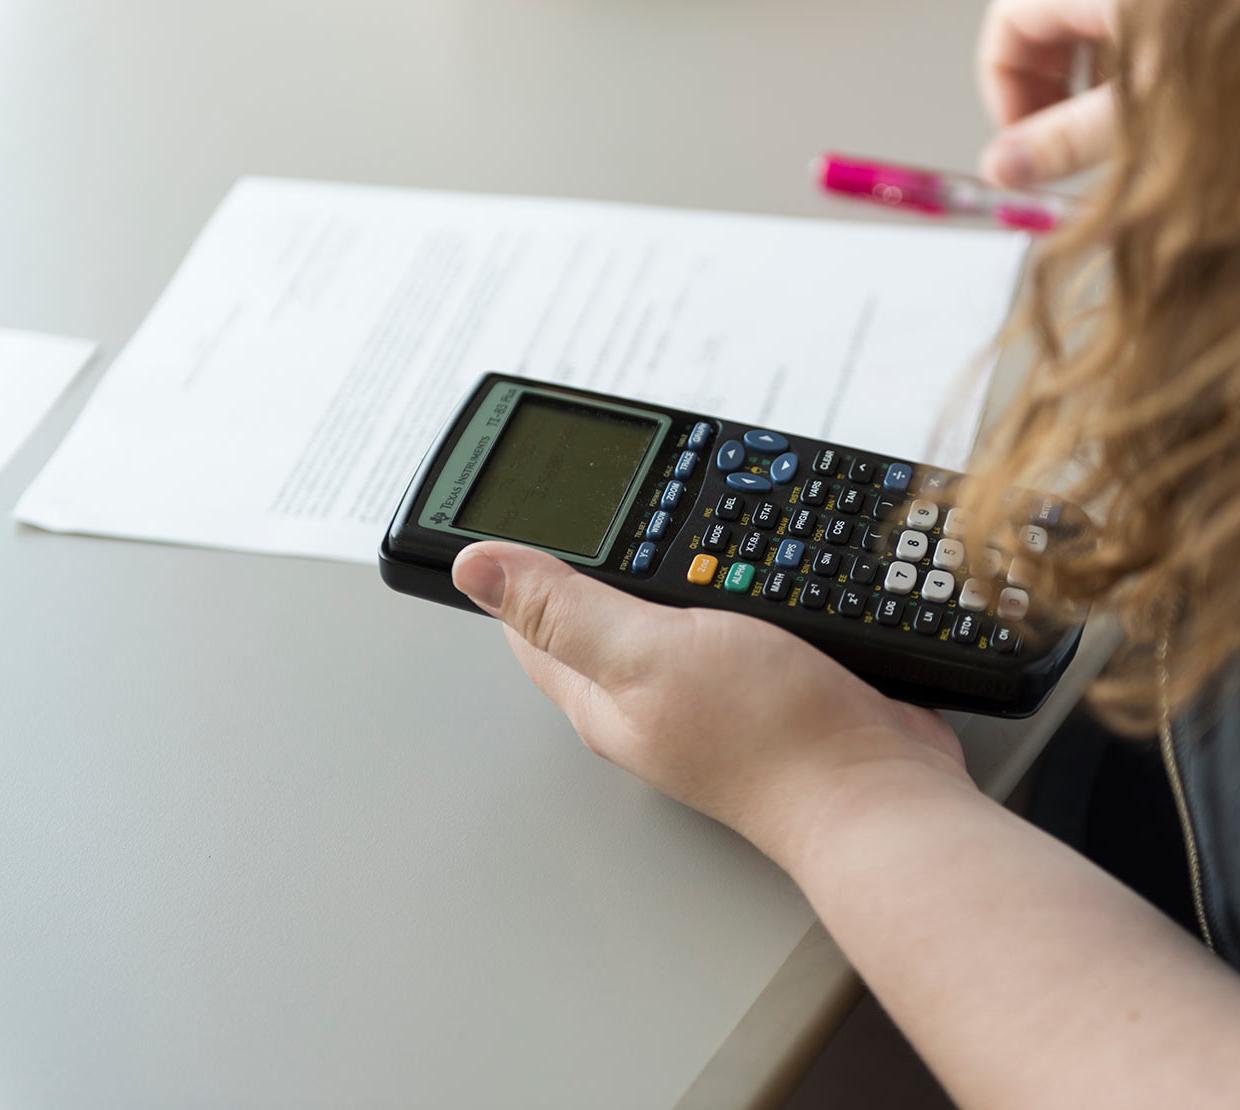 student working on math homework holding calculator